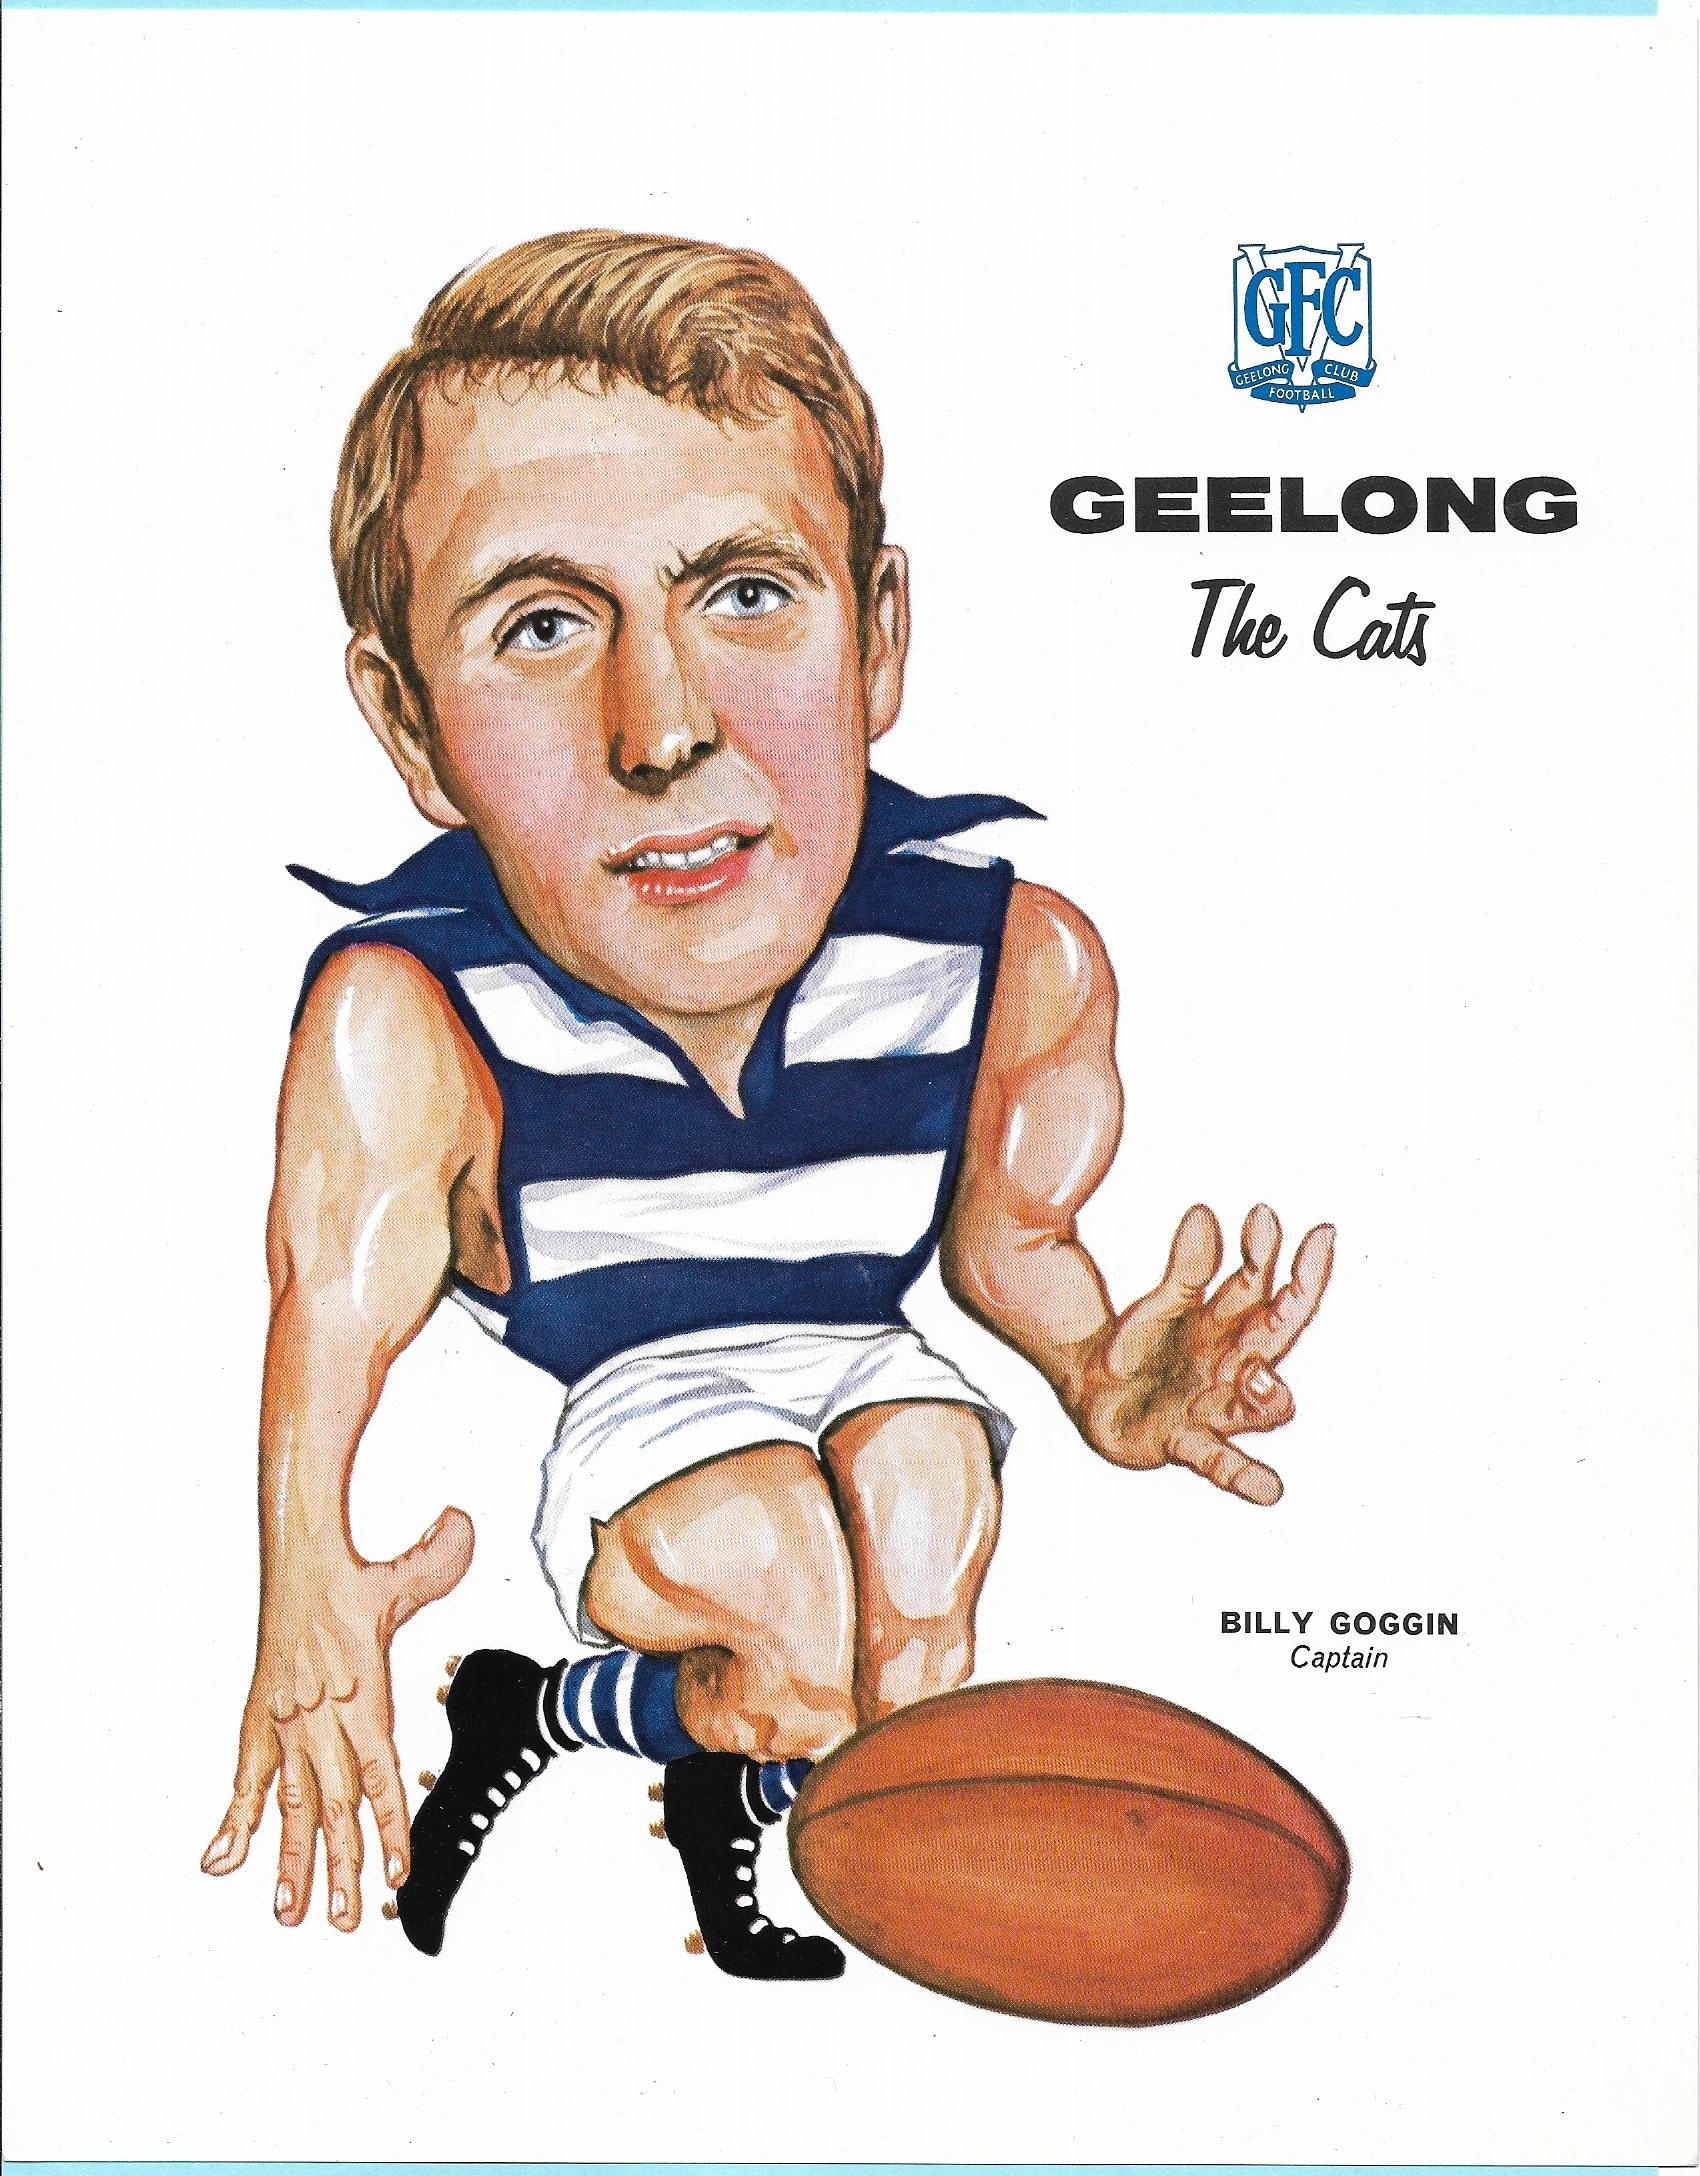 1969 Twisties Captain Poster Geelong – Billy Goggin (Near Mint)